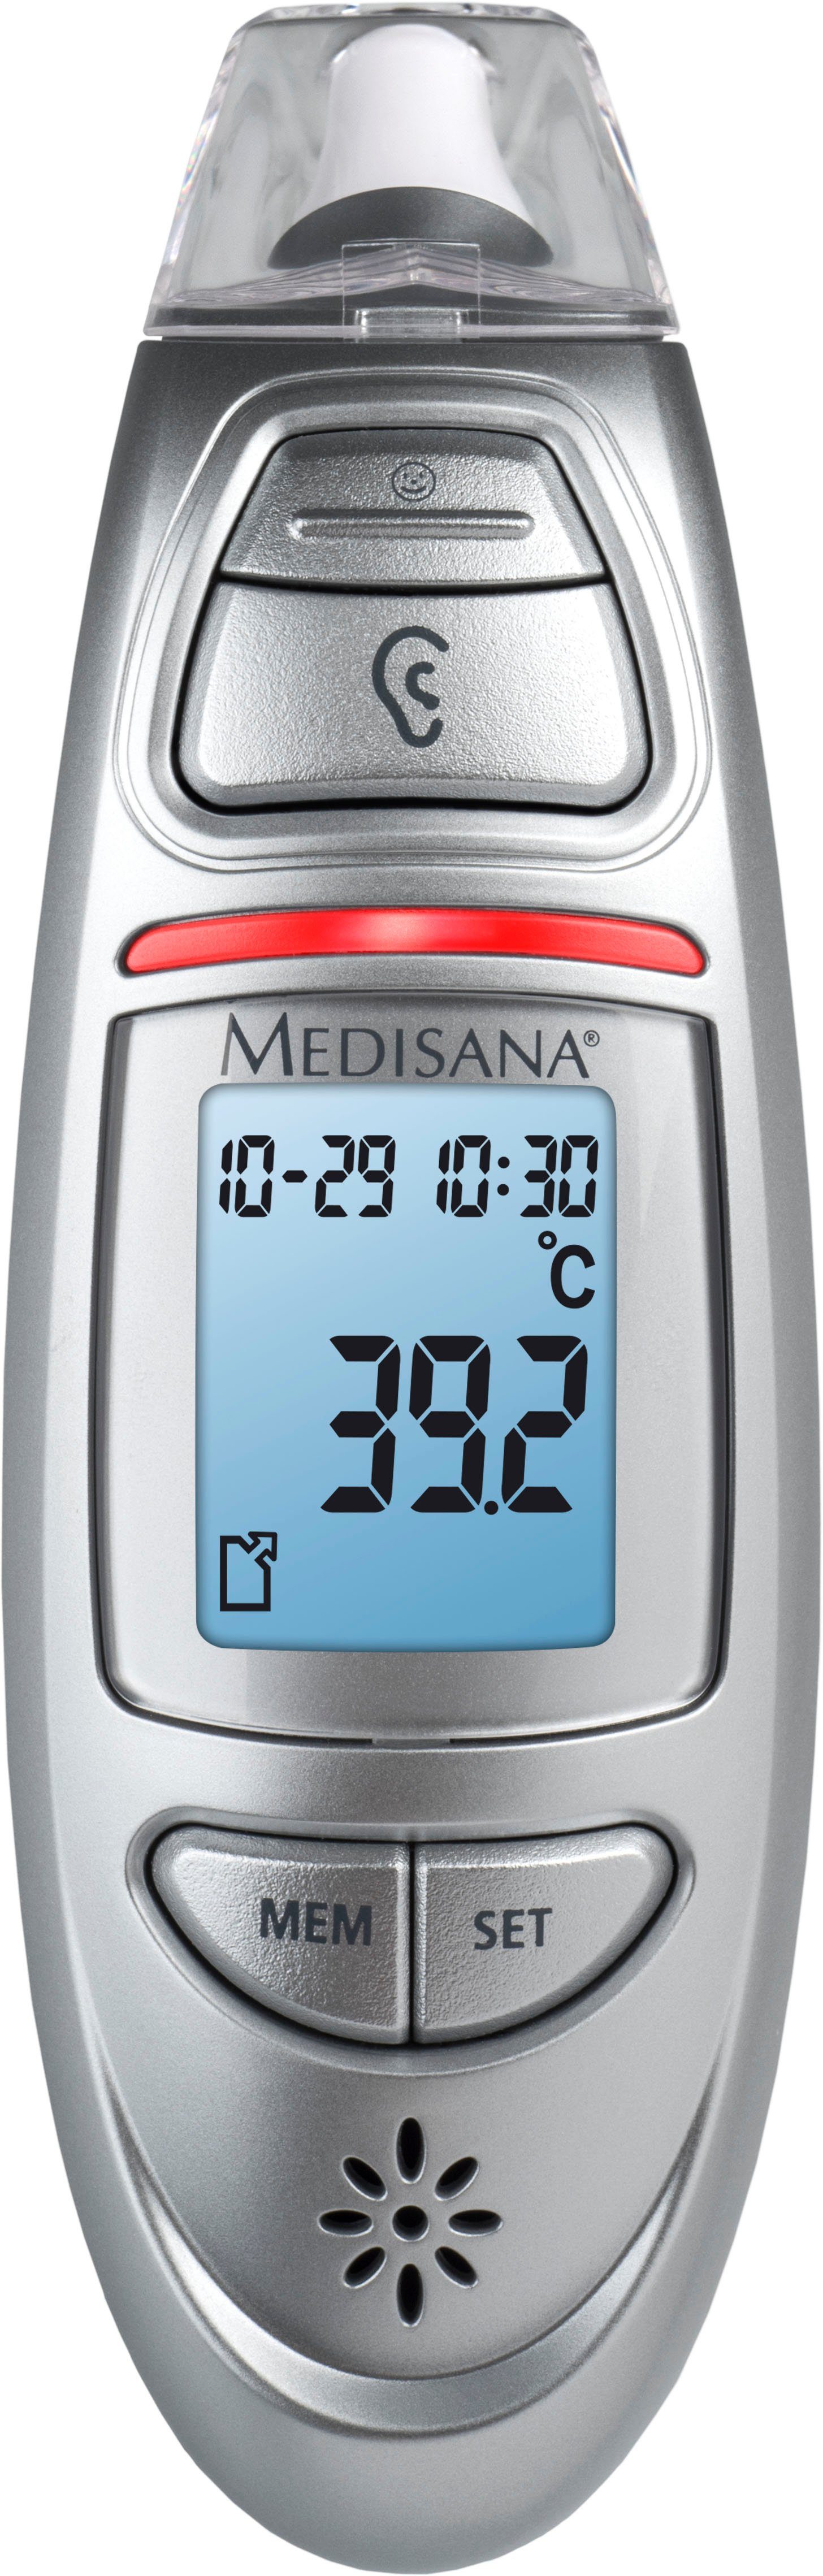 TM 750 Connect Medisana Fieberthermometer